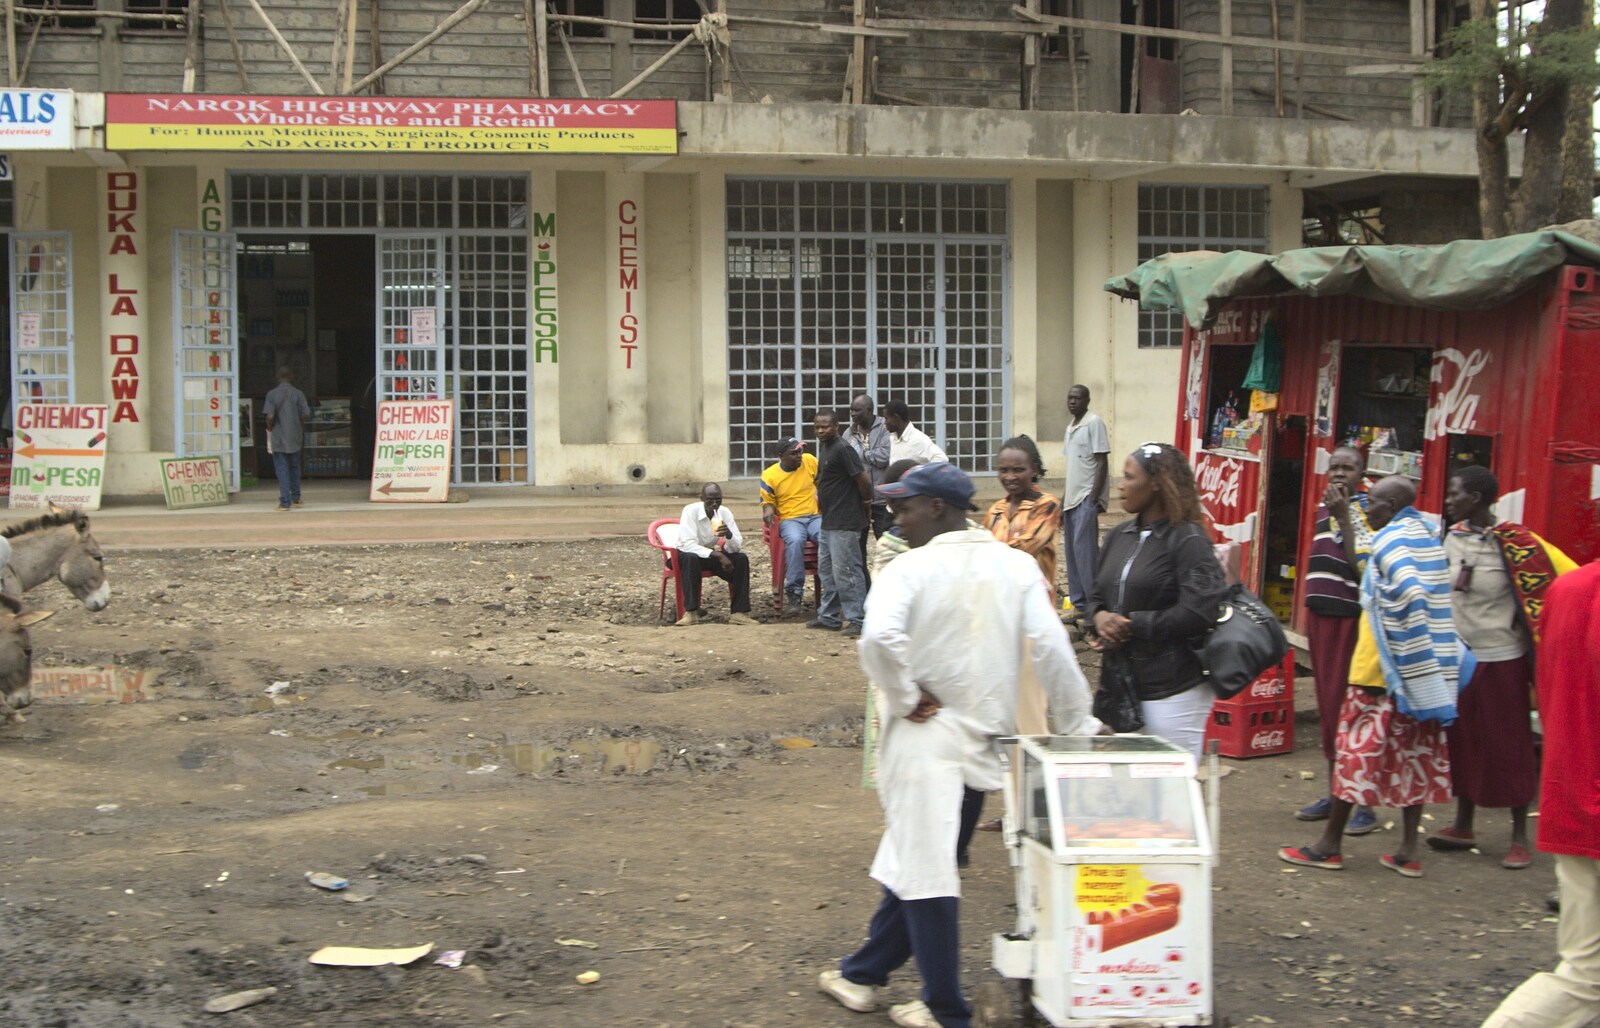 Narok to Naivasha and Hell's Gate National Park, Kenya, Africa - 5th November 2010: Outside the Narok Highway Pharmacy